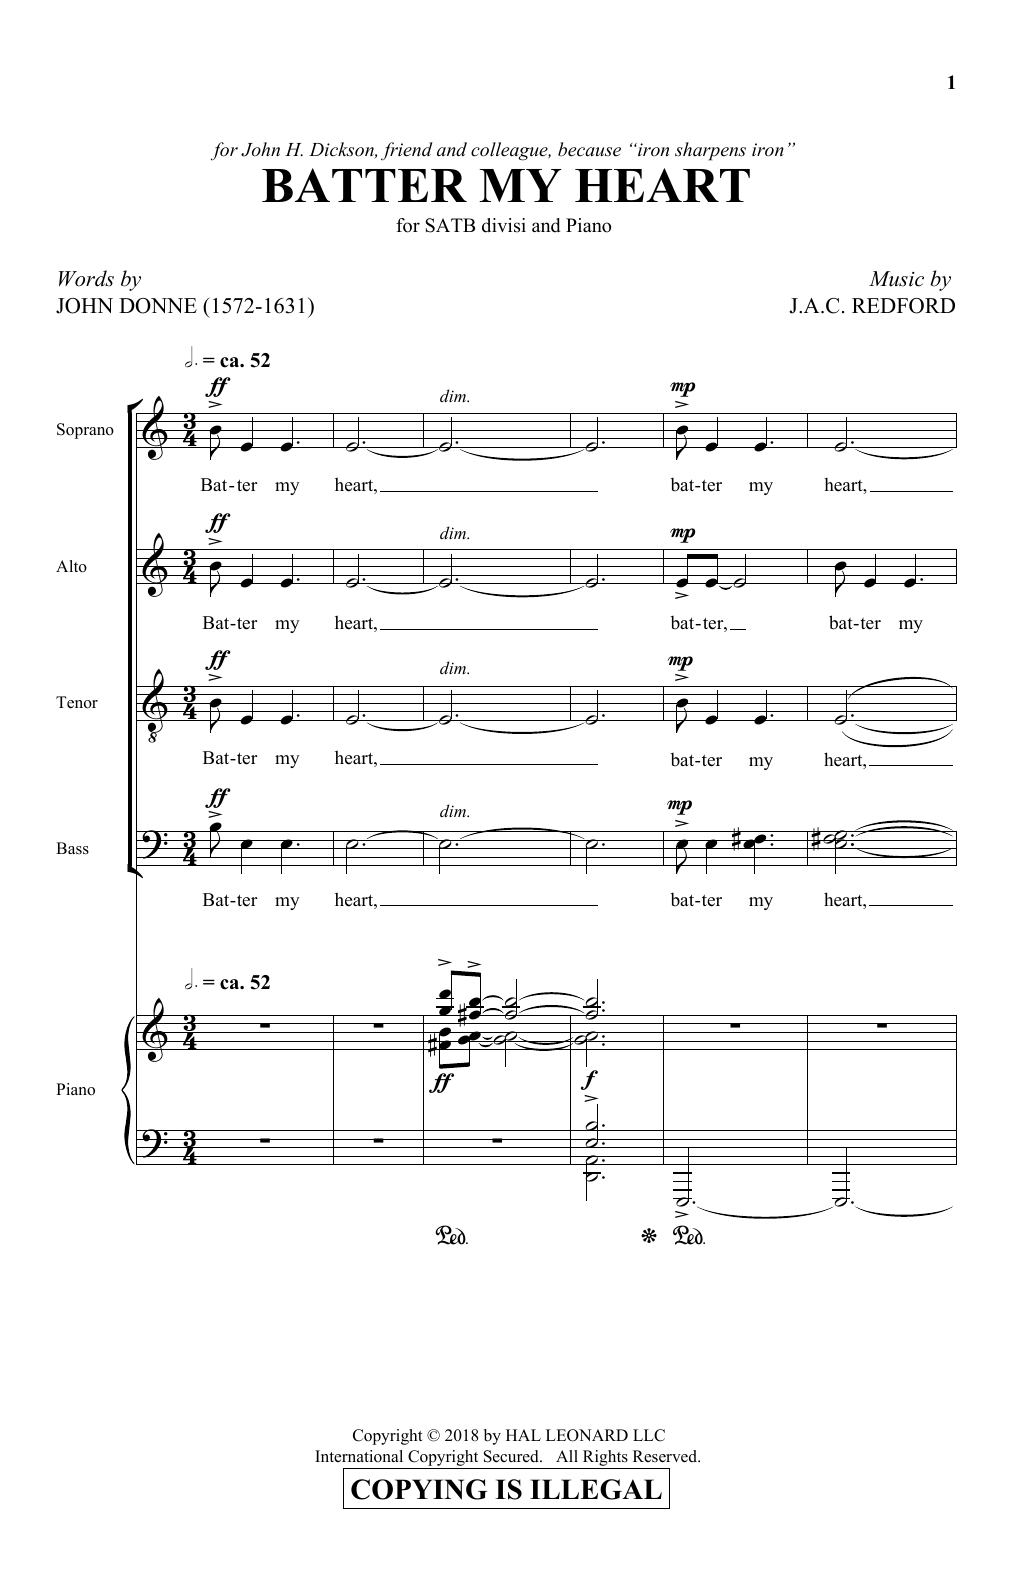 J.A.C Redford & John Donne Batter My Heart Sheet Music Notes & Chords for SATB Choir - Download or Print PDF